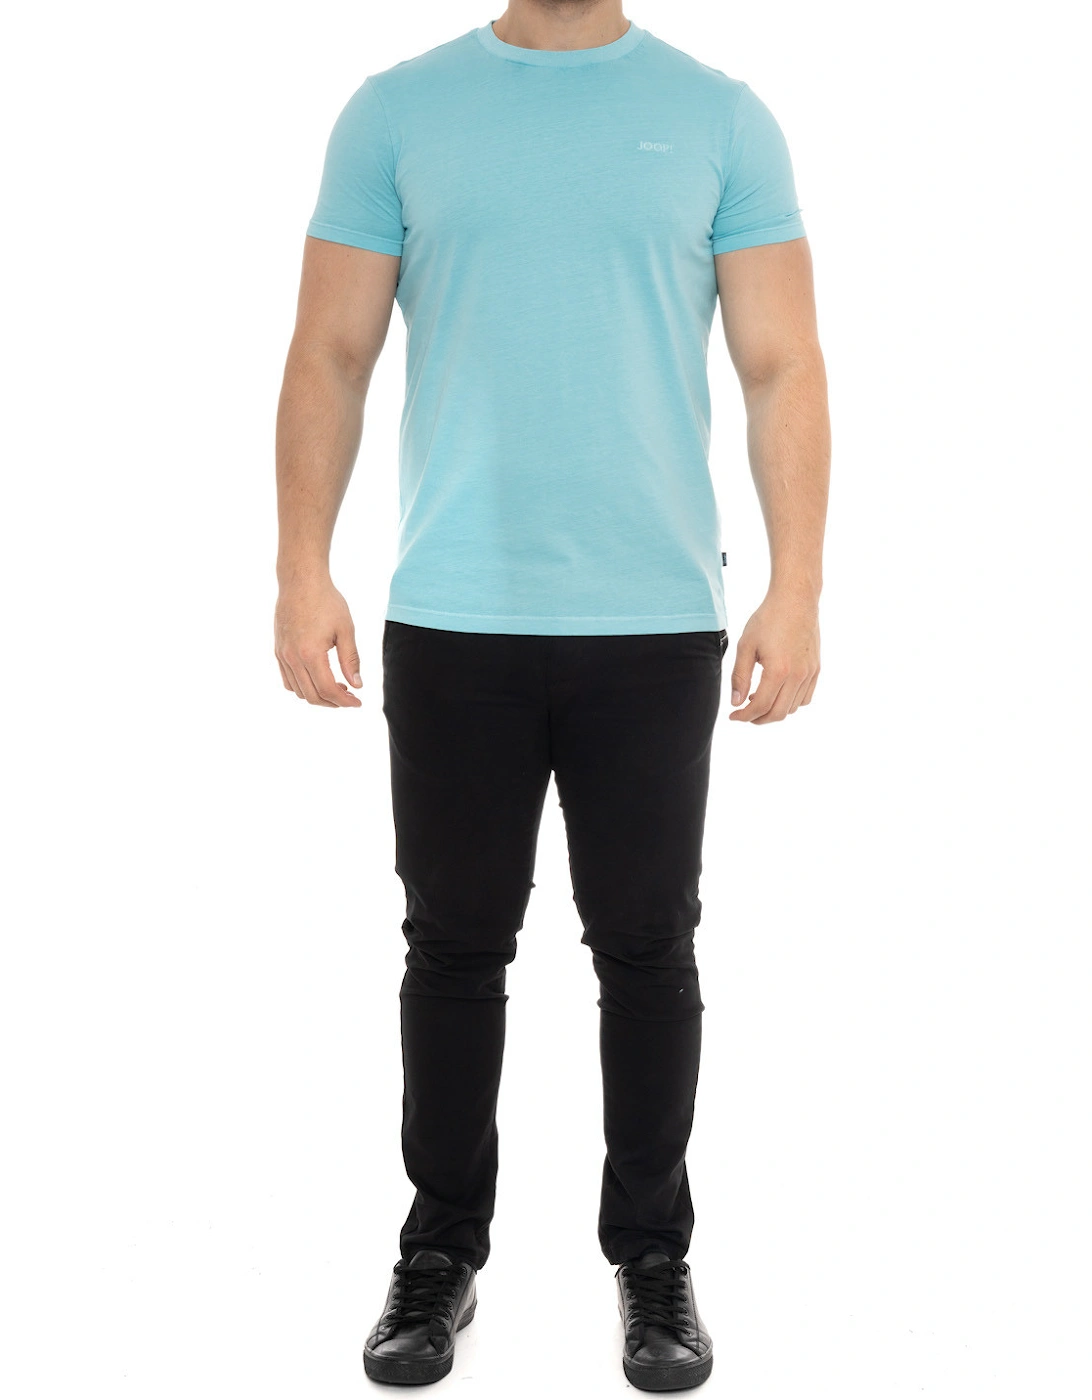 Joop Mens Plain T-Shirt (Turquoise)